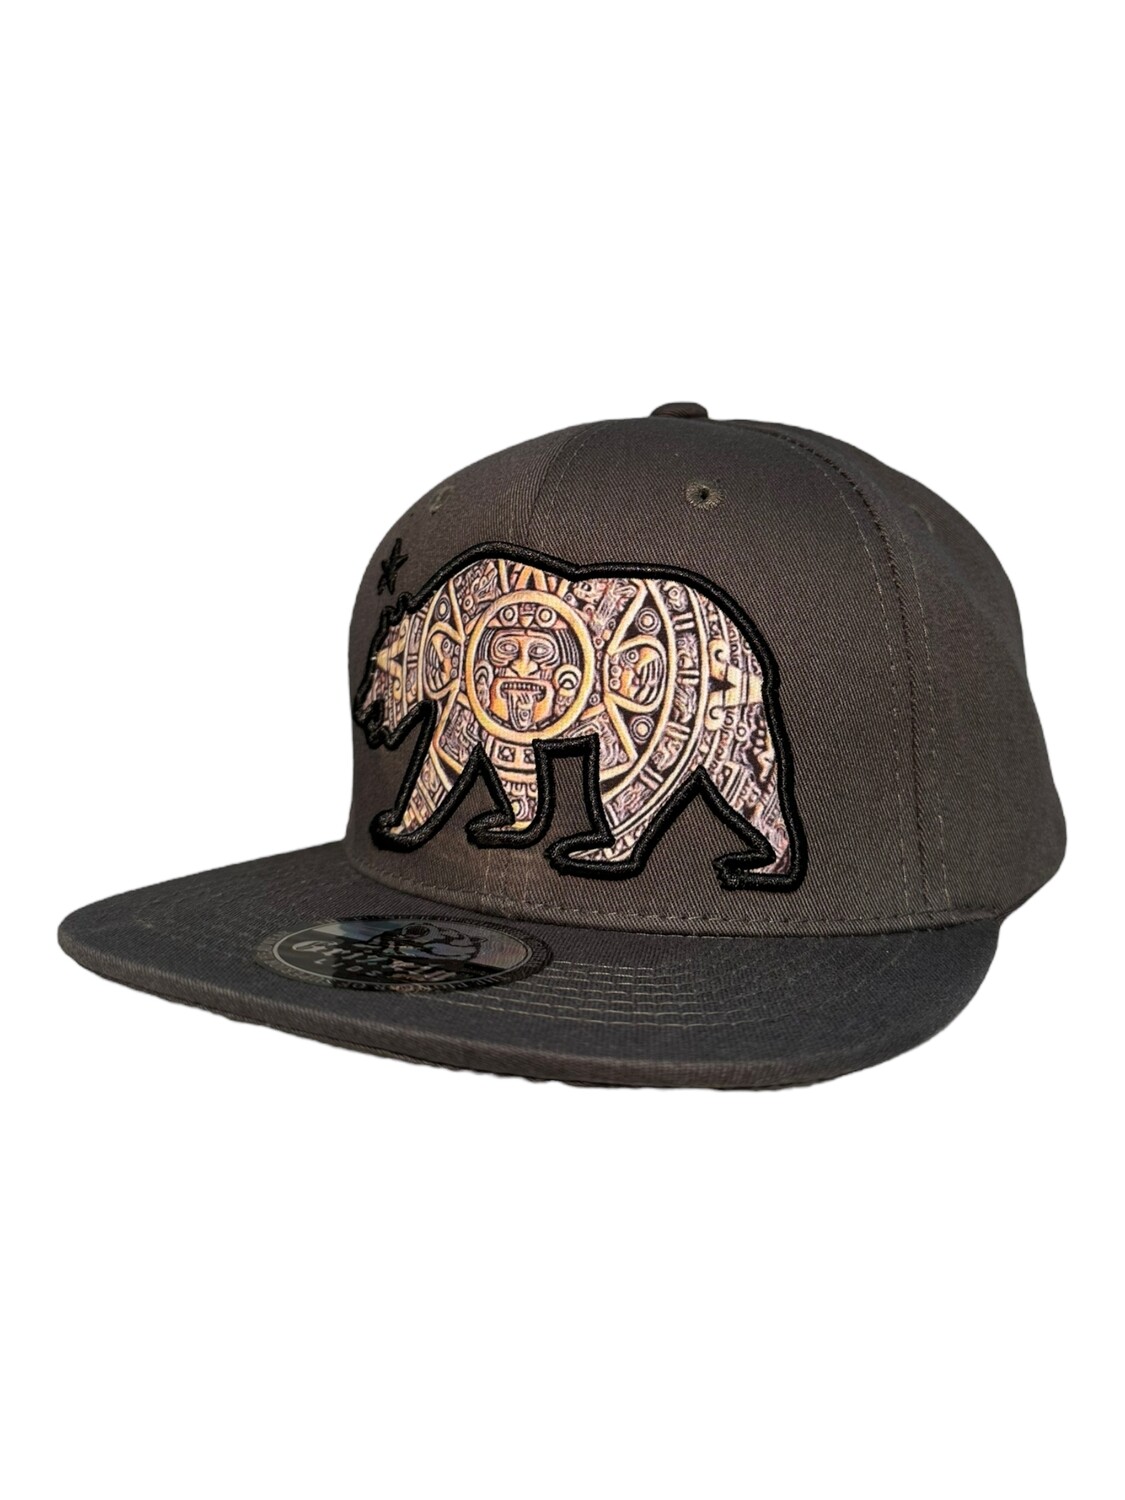 Aztec California Bear Snapback 6 Panel Adjustable Snap Fit Hat